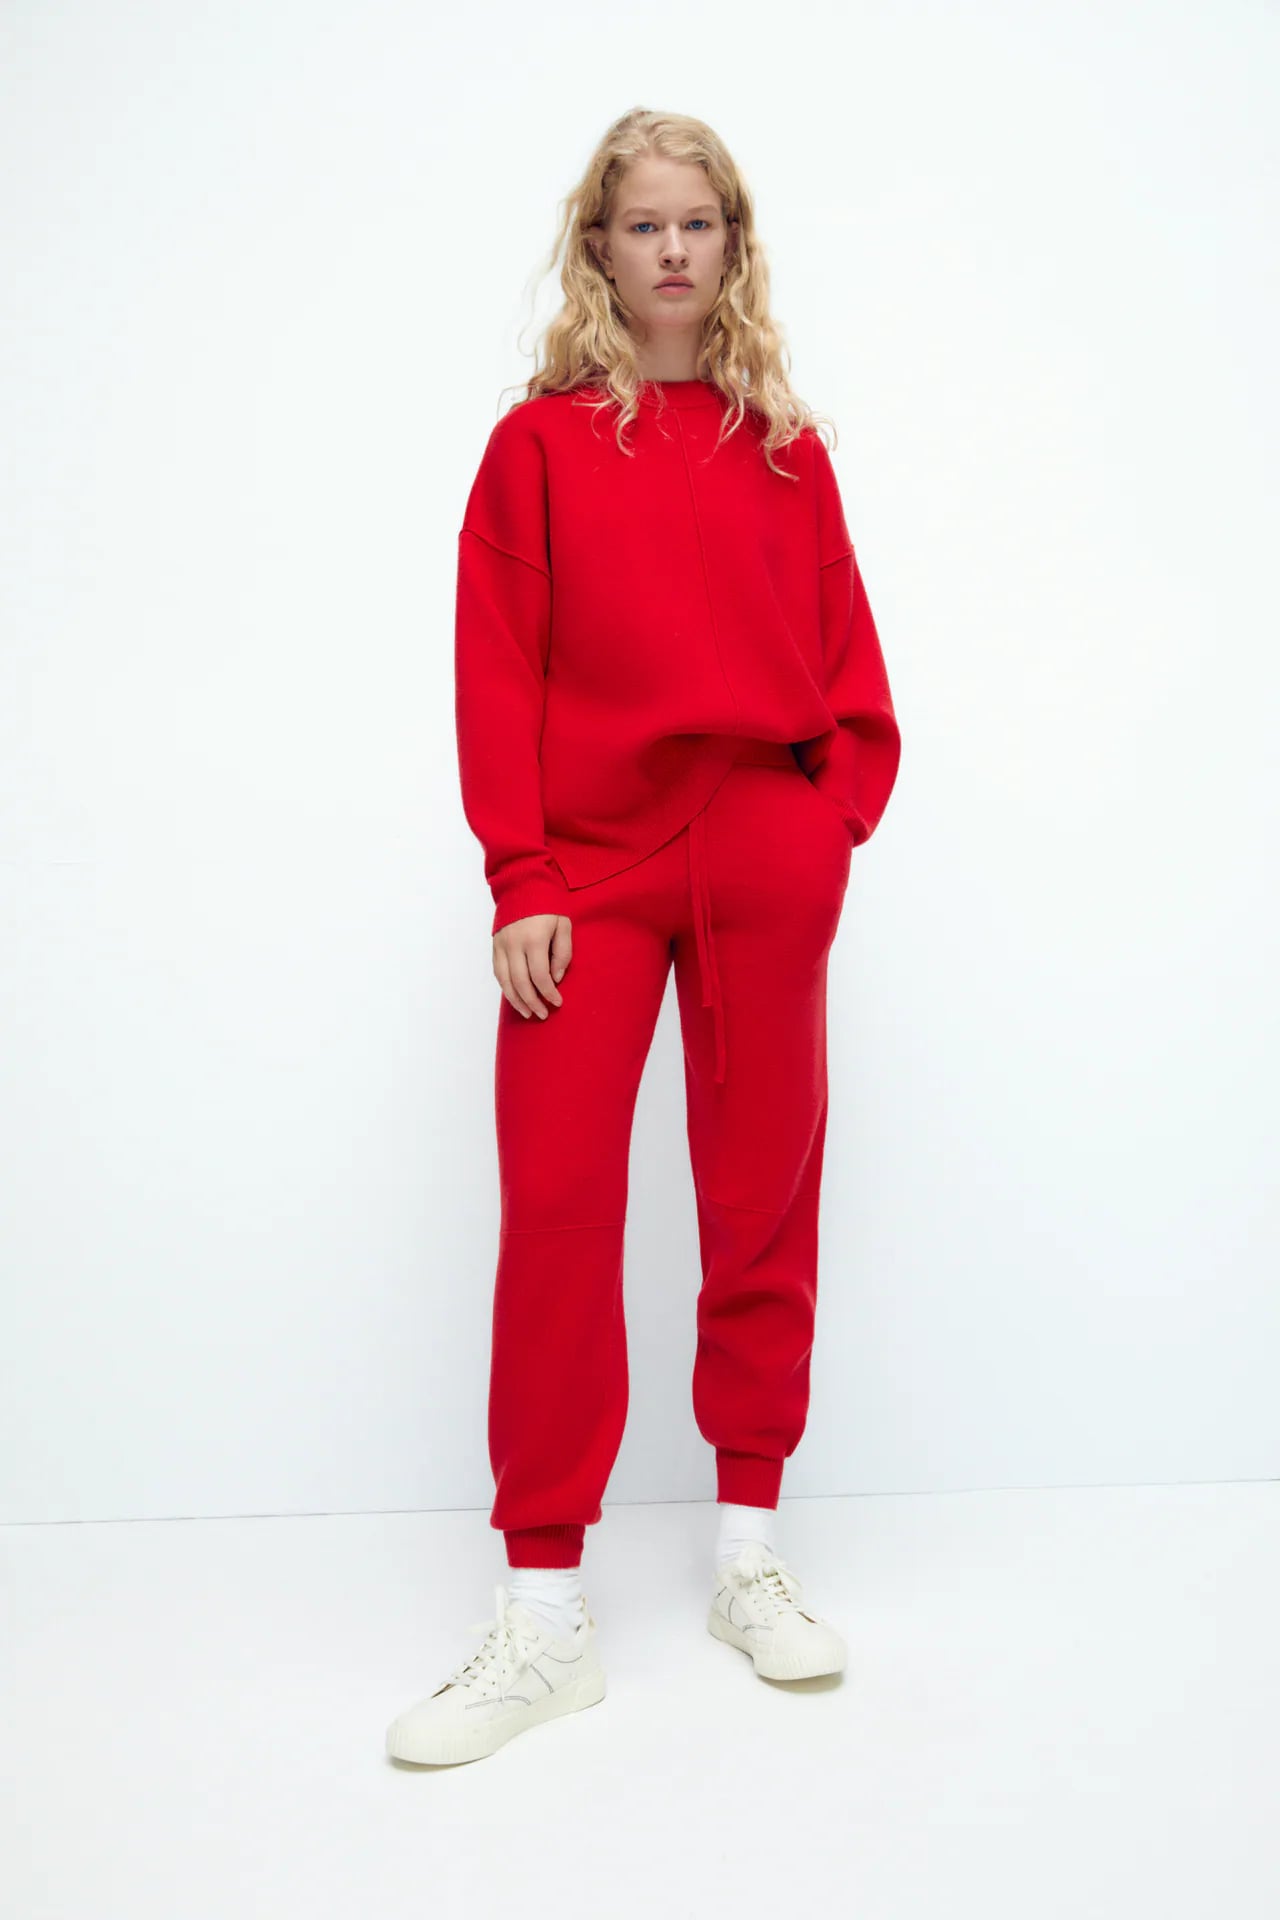 Head-to-Toe Red: Zara Knit Jogging Pants